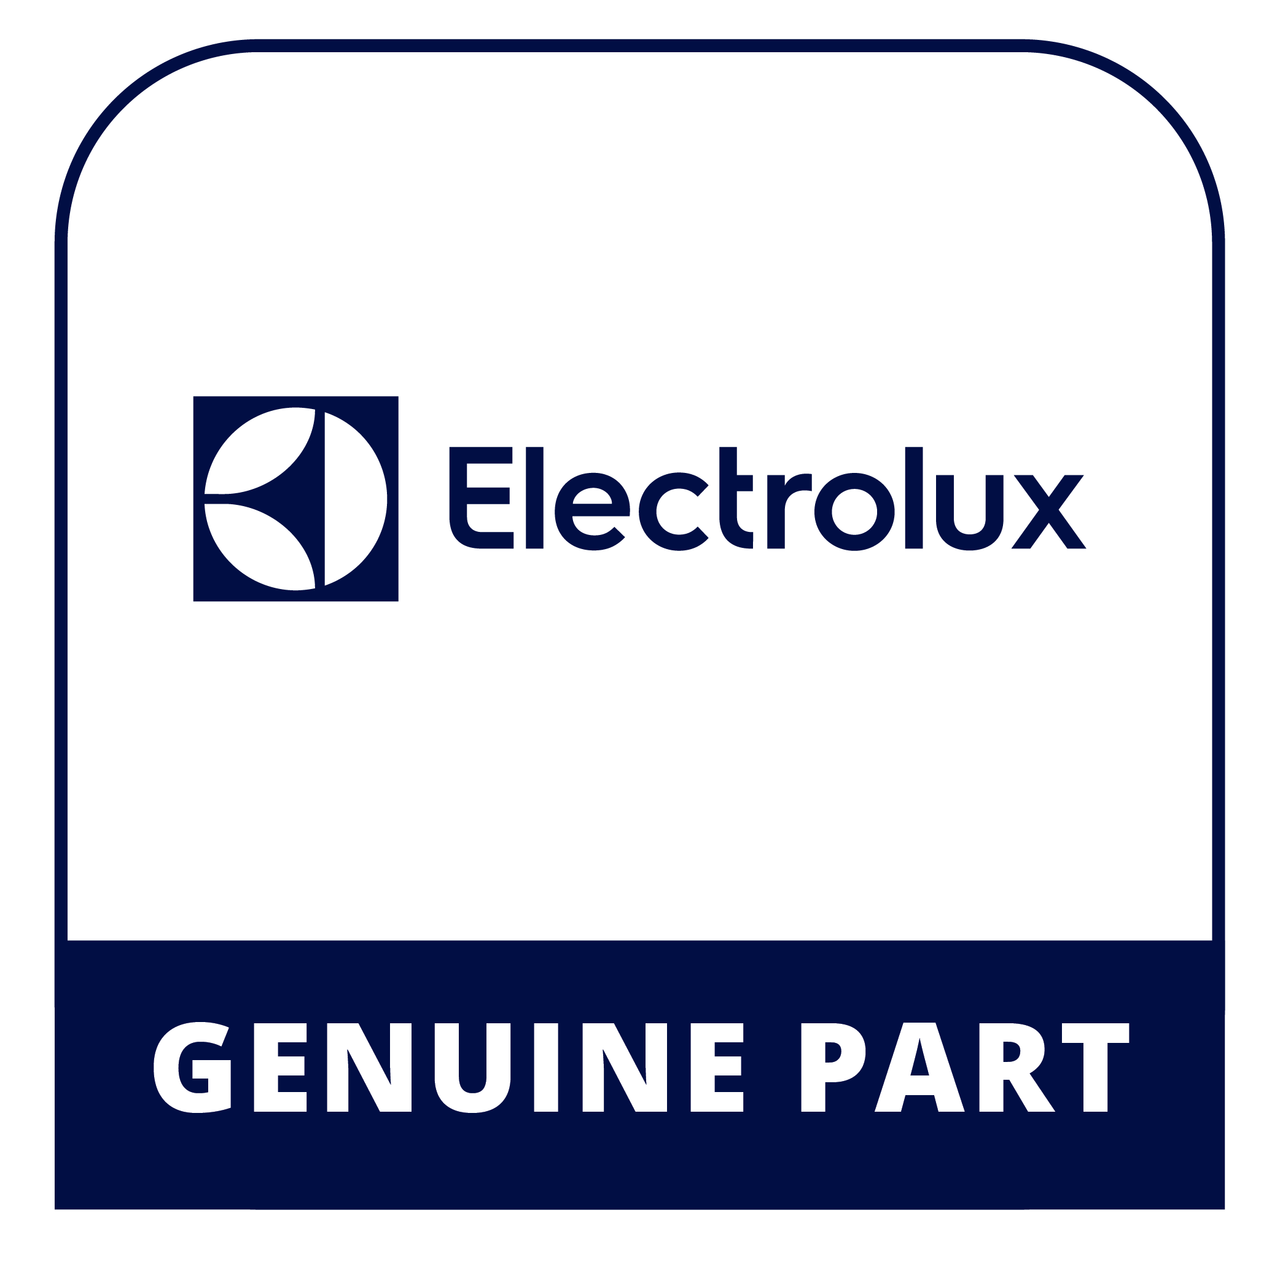 Frigidaire - Electrolux 3205549 Gasket - Genuine Electrolux Part